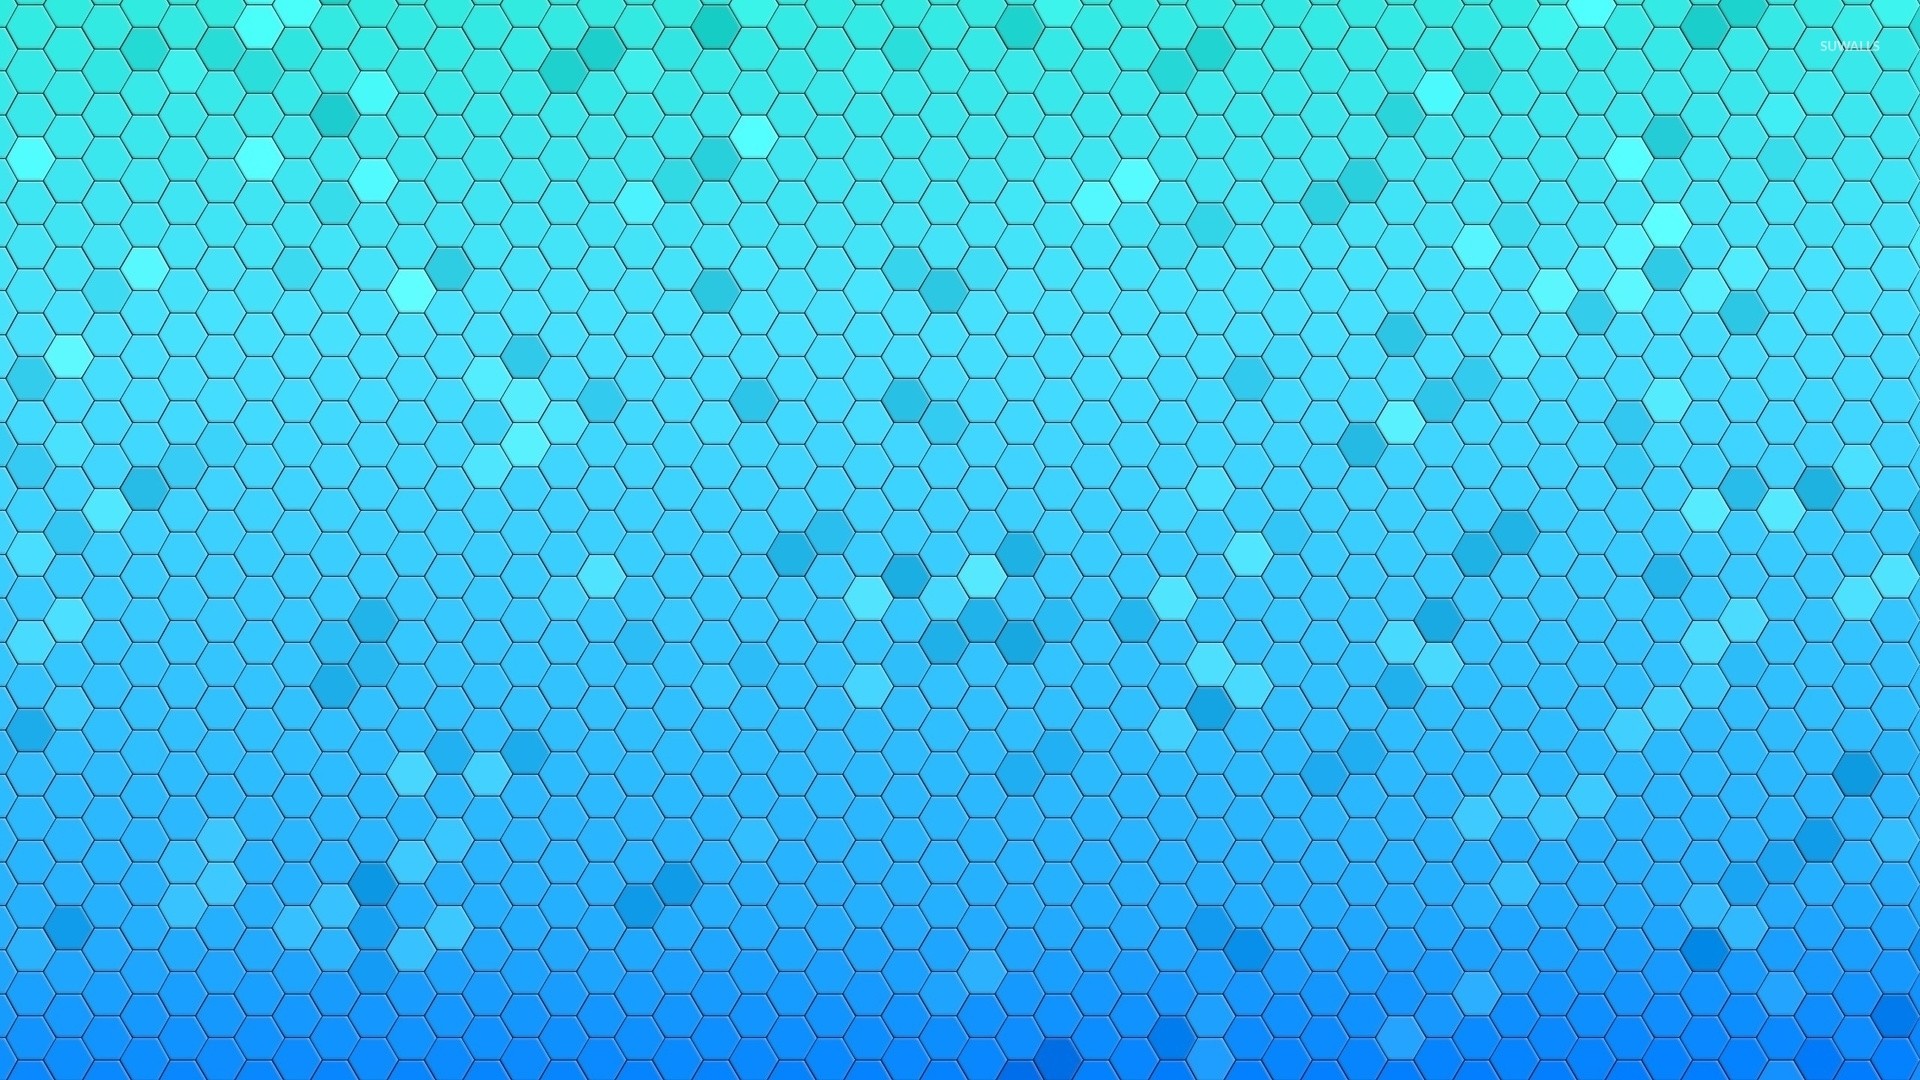 1920x1080 Blue honeycomb pattern wallpaper